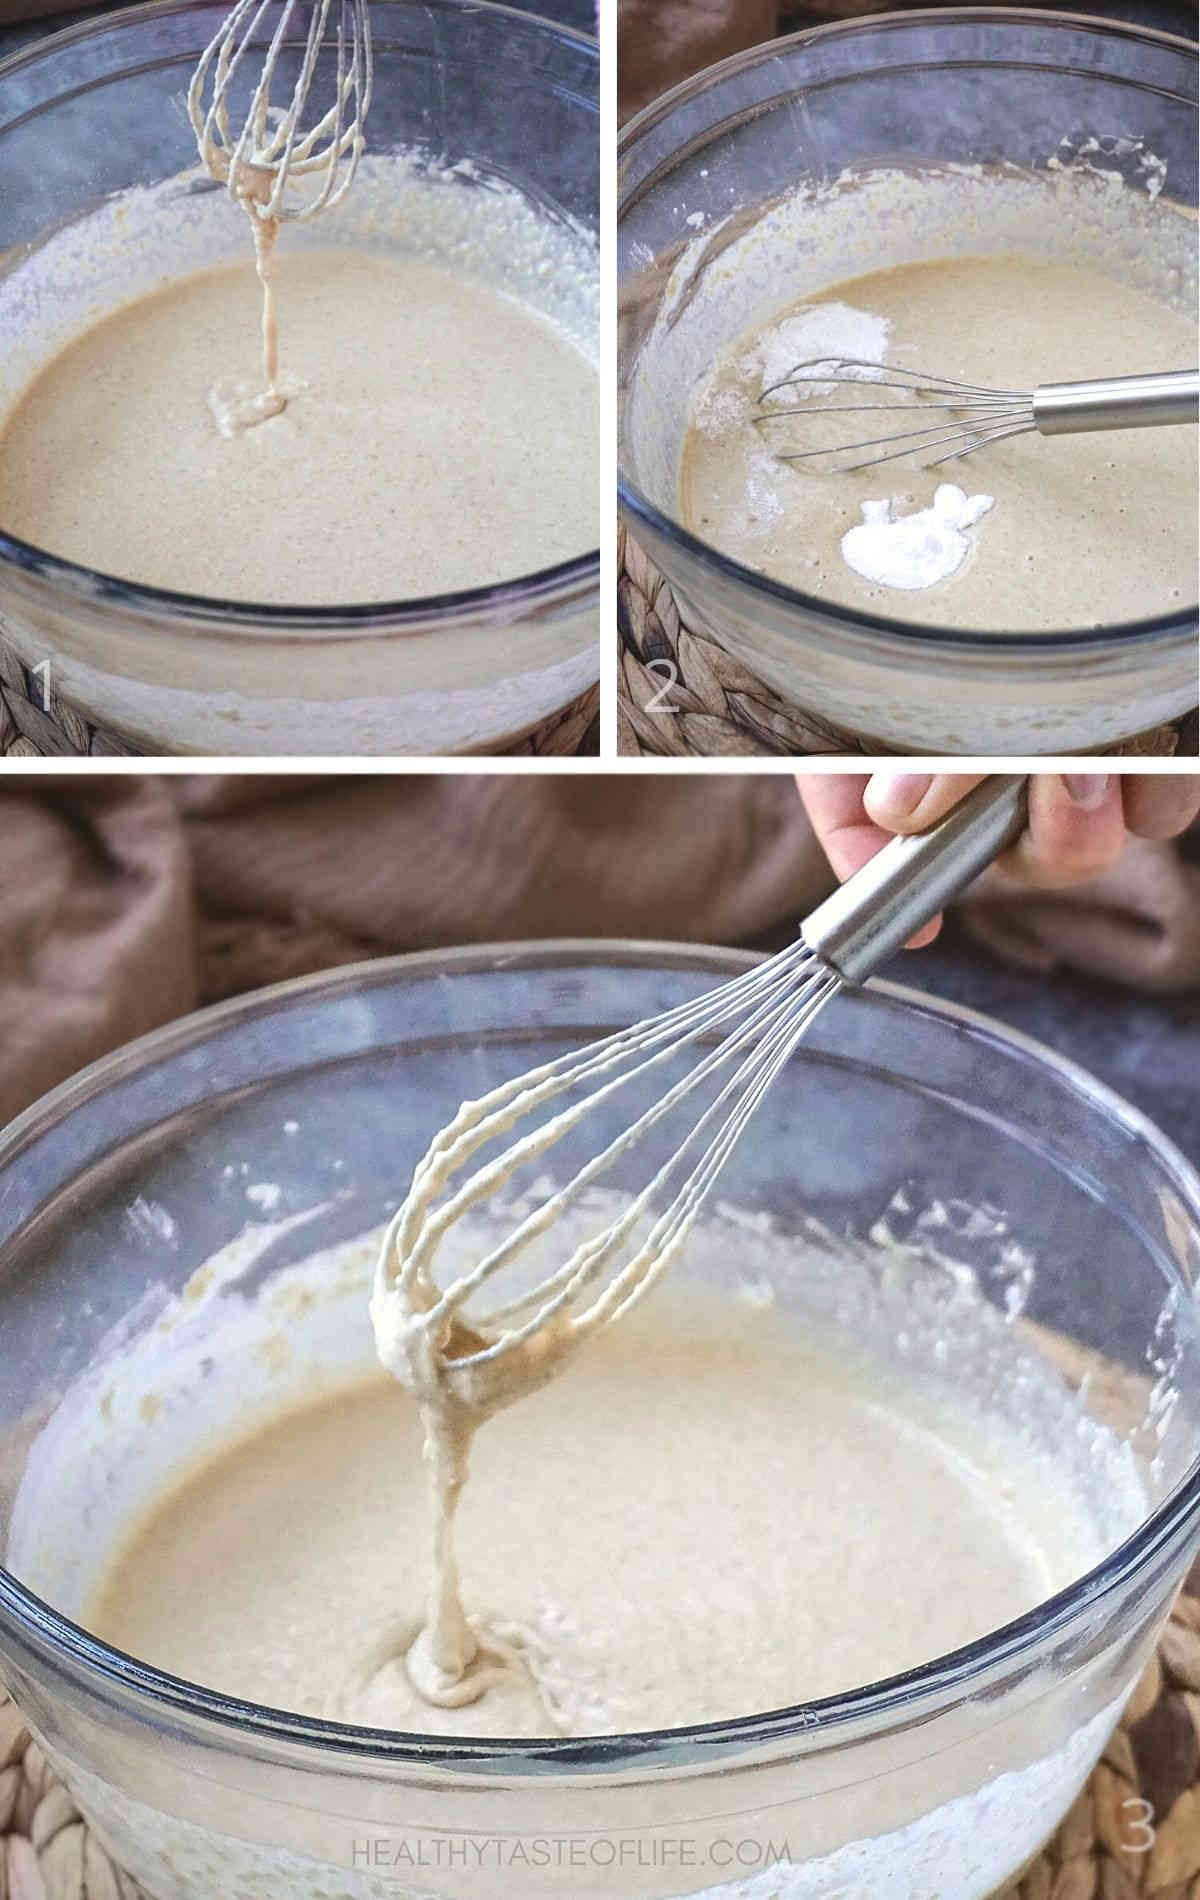 Process shot: mixing oat flour pancake batter showing the consistency.